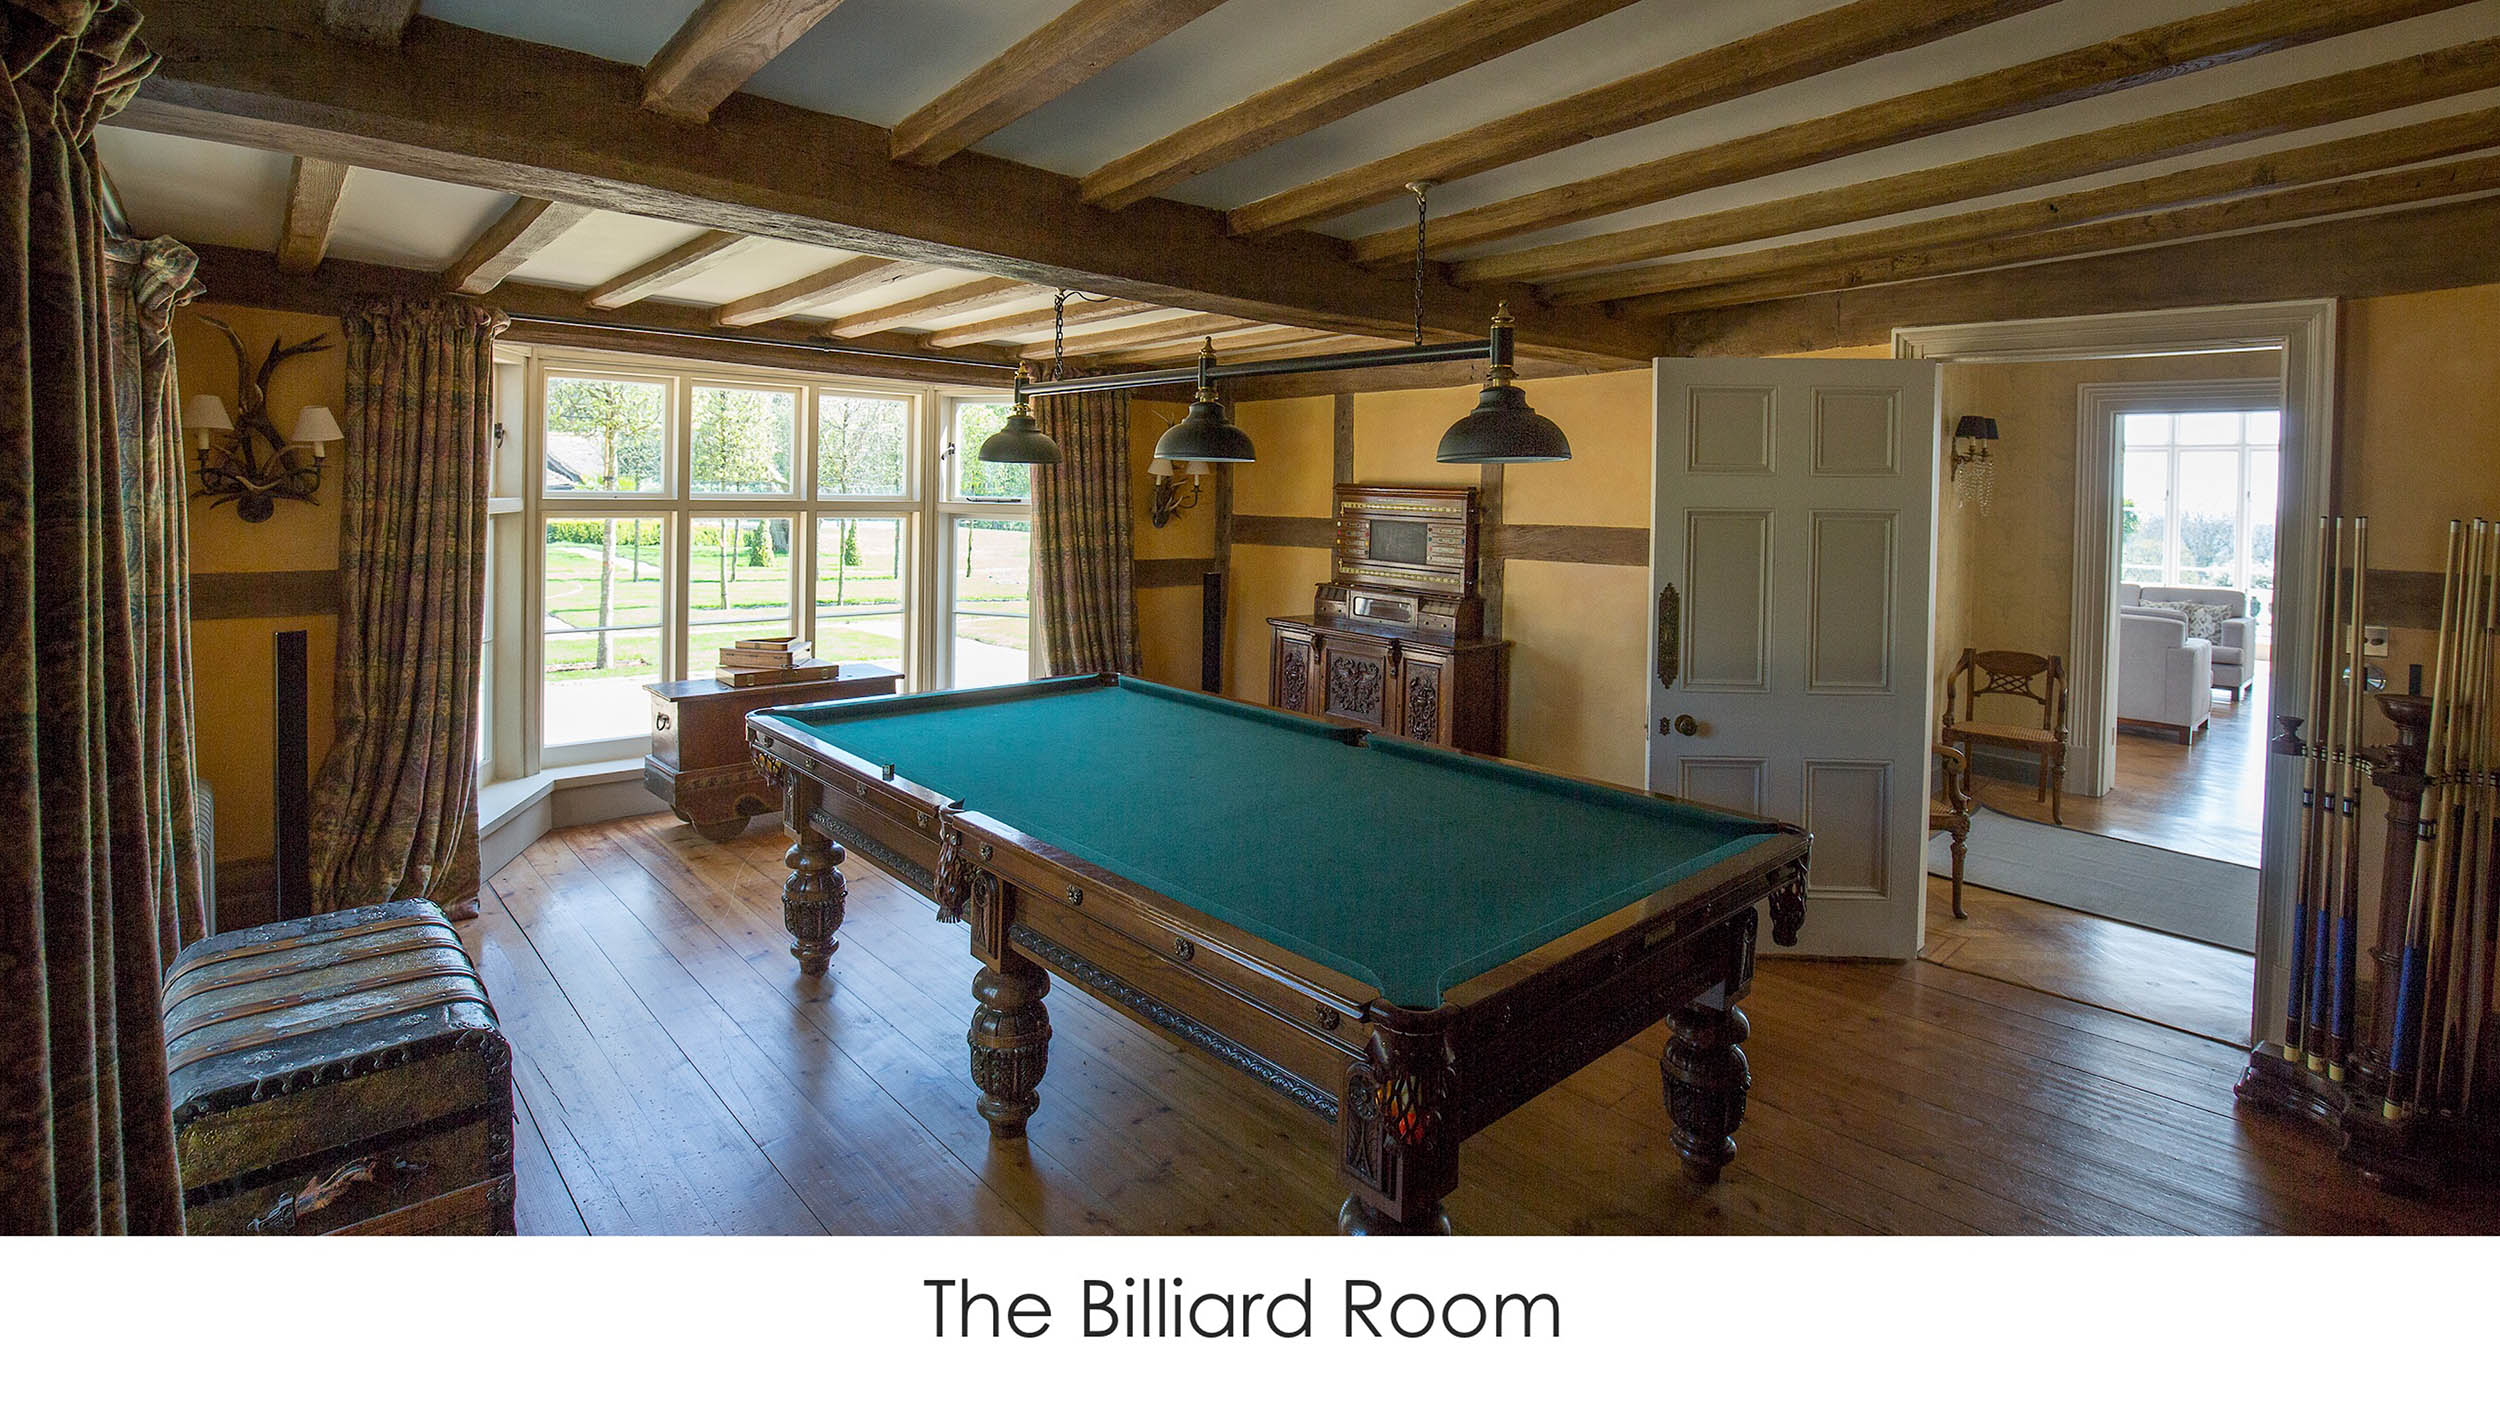 The Billiard Room - Pennybridge House - Real Estate Development Projects by Gabriella Atkinson.